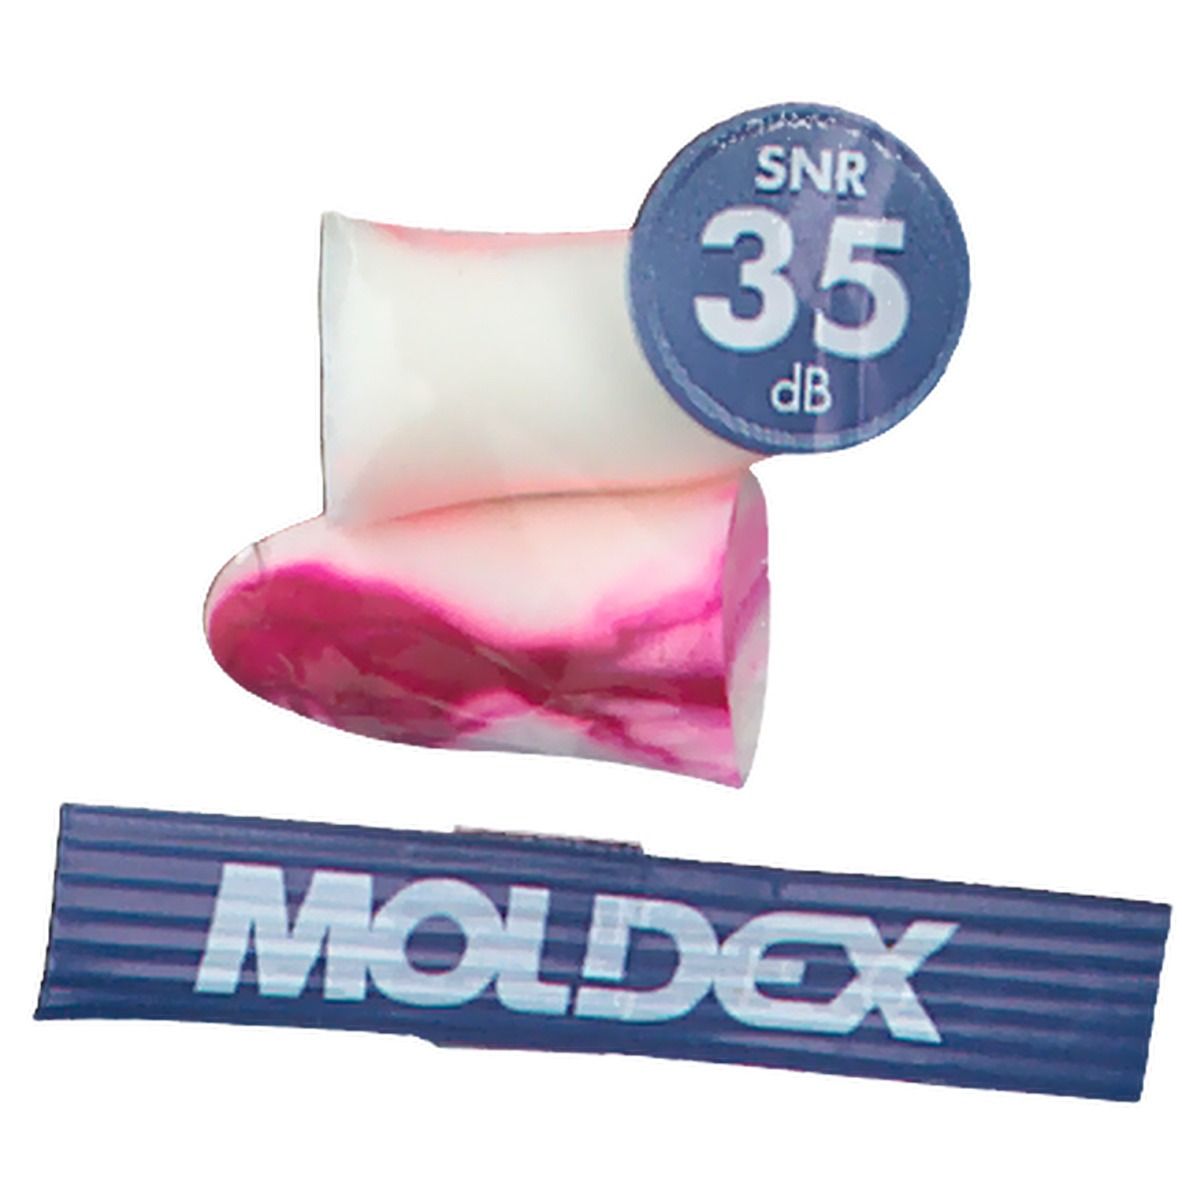 MOLDEX Spark Plugs® soft